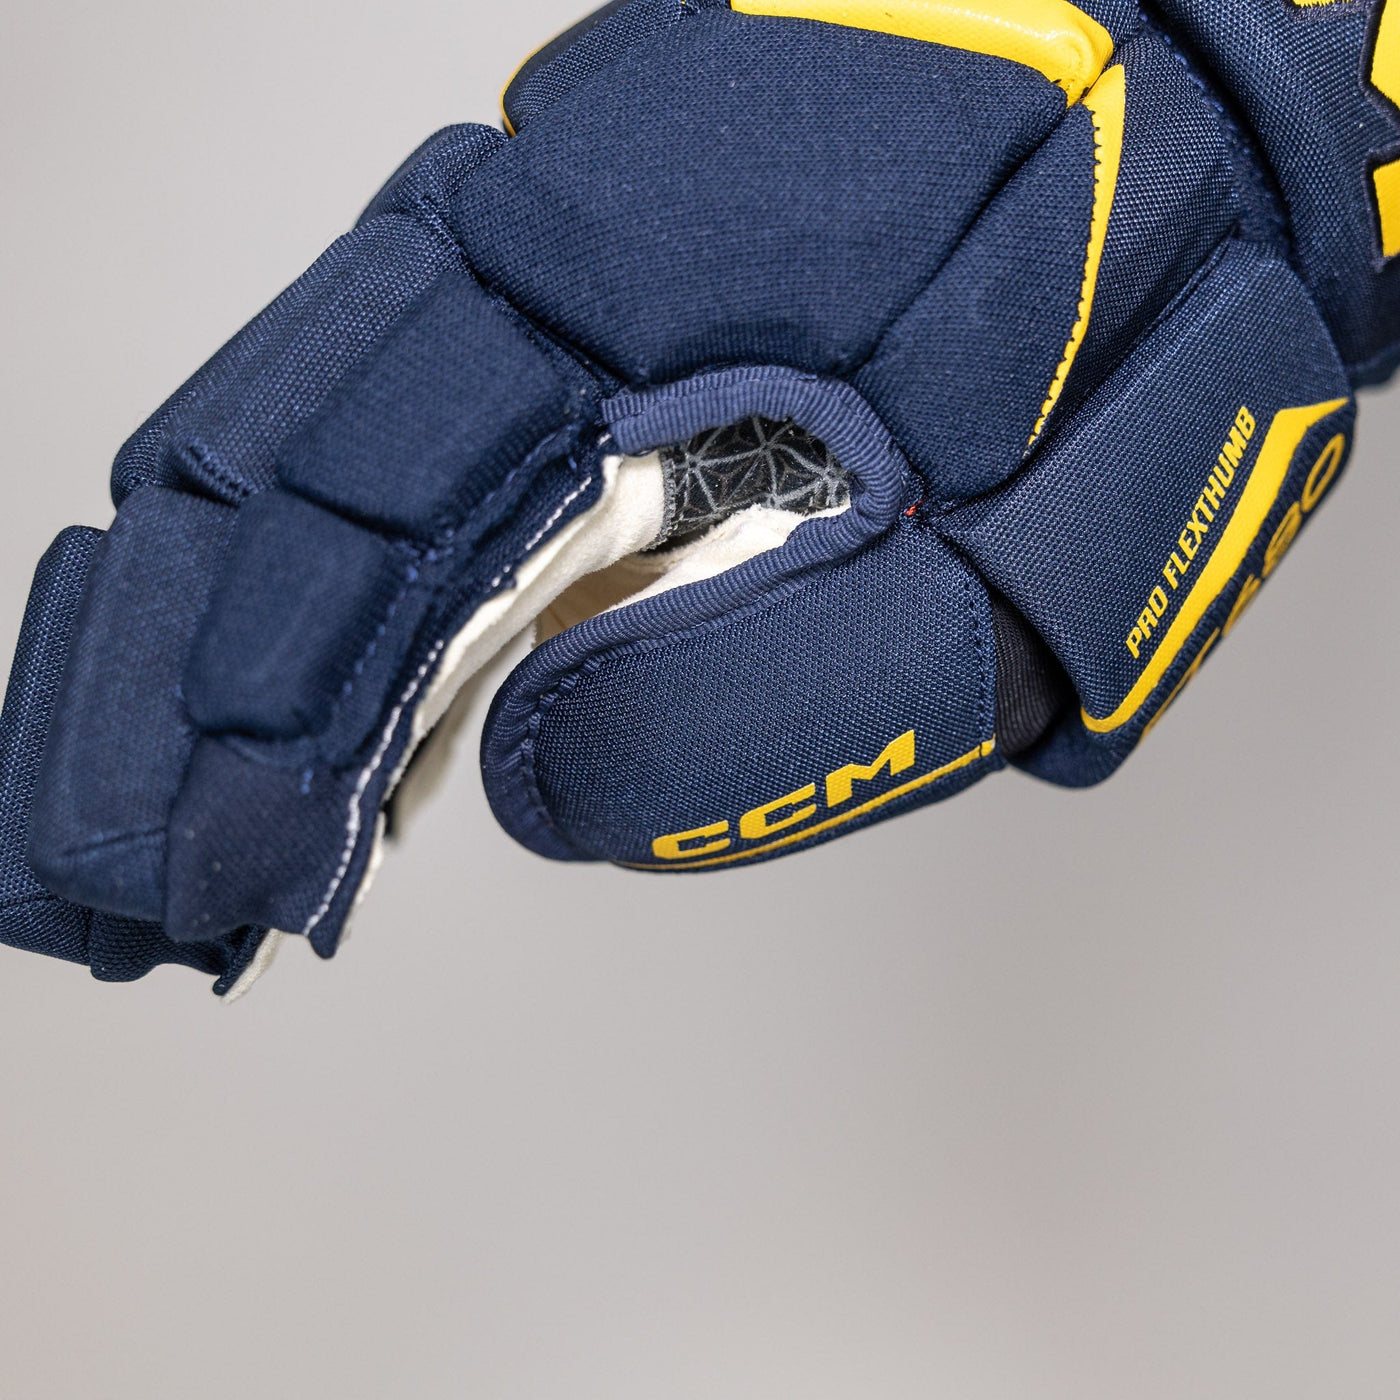 CCM Jetspeed FT680 Senior Hockey Gloves - The Hockey Shop Source For Sports